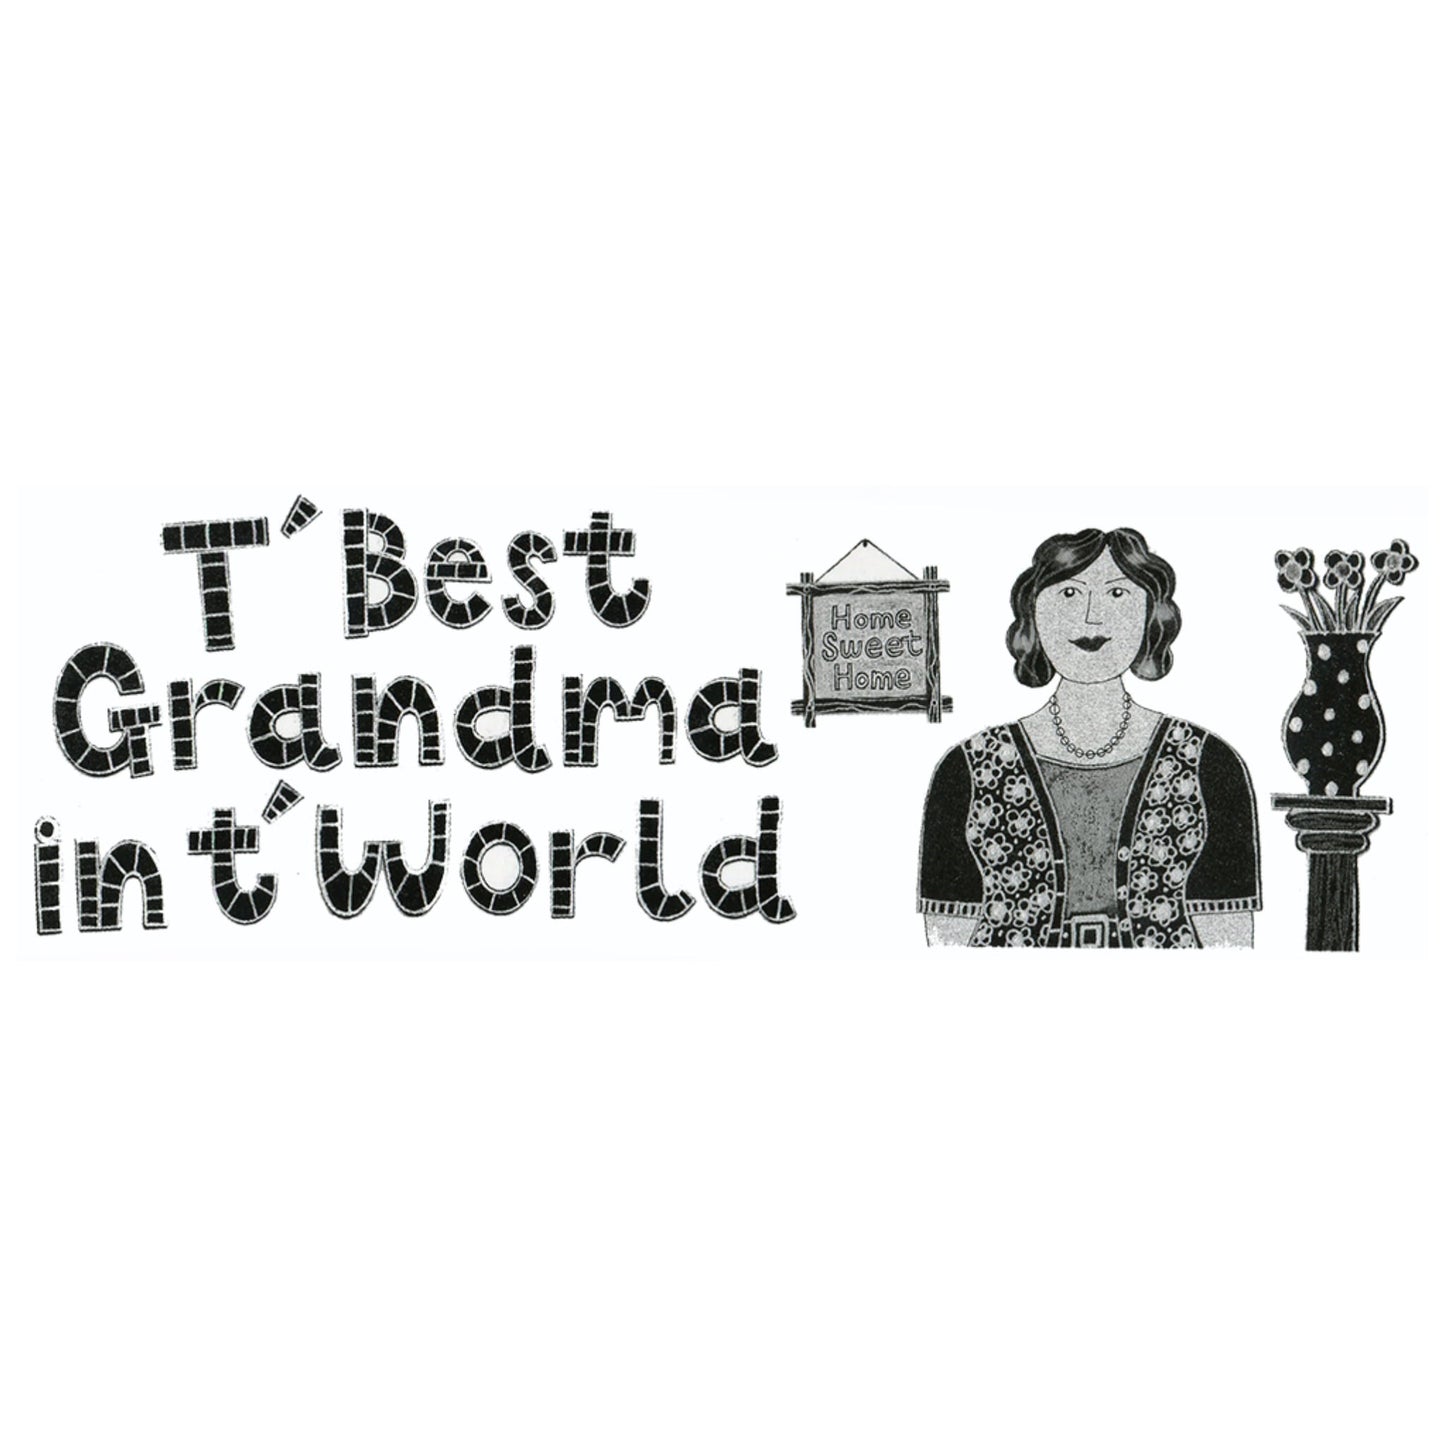 T'Best Grandma in T'World Mug - The Great Yorkshire Shop